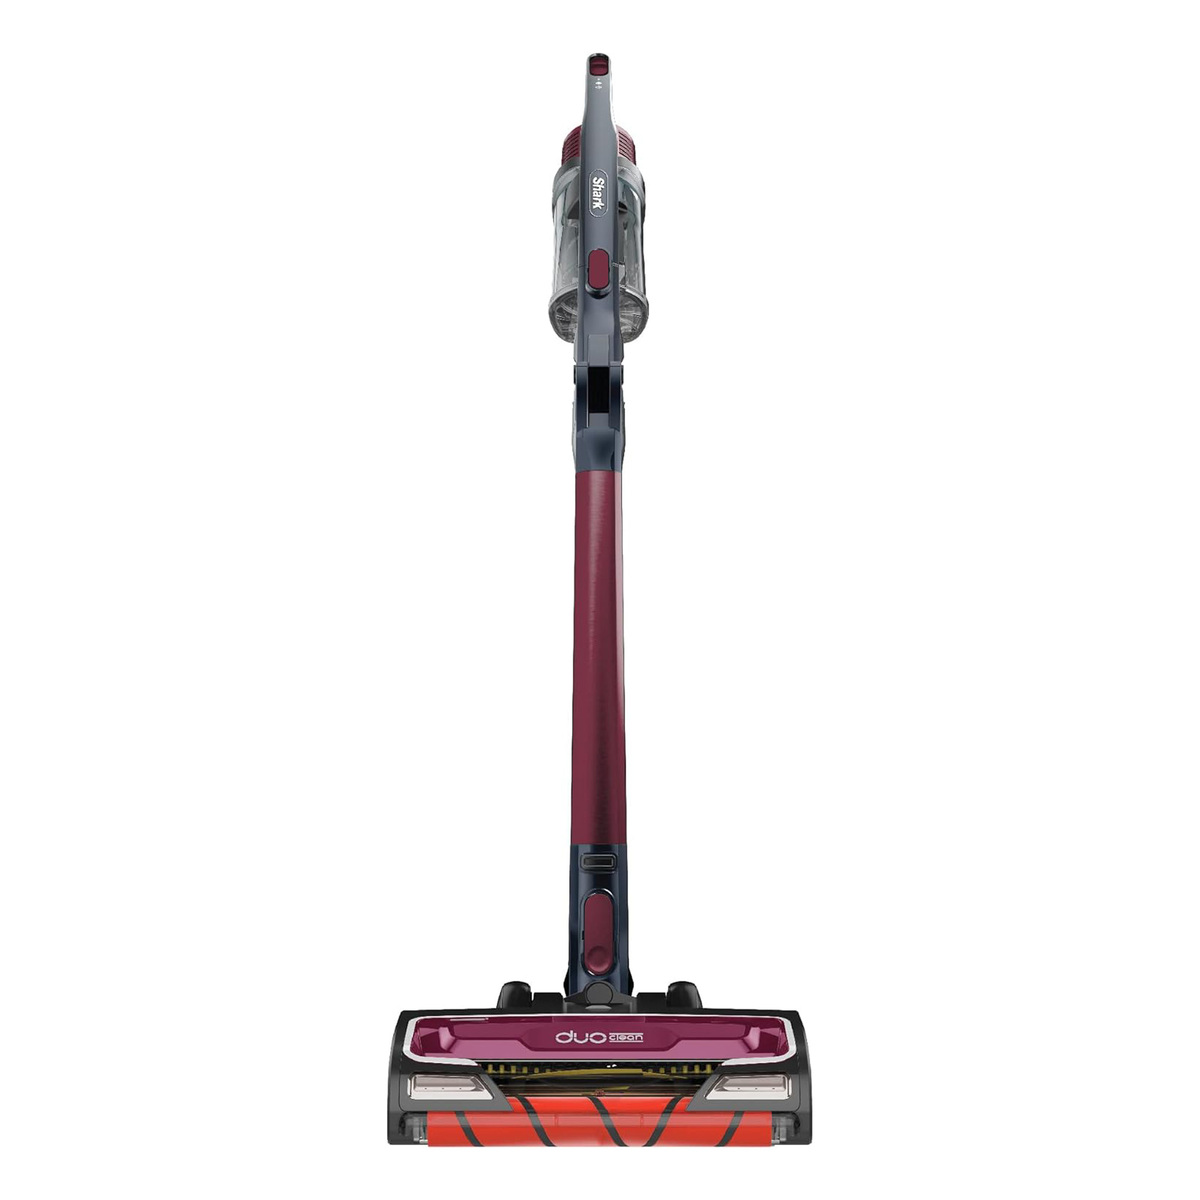 Shark Cordless Vacuum Cleaner with DuoClean, IZ201ME